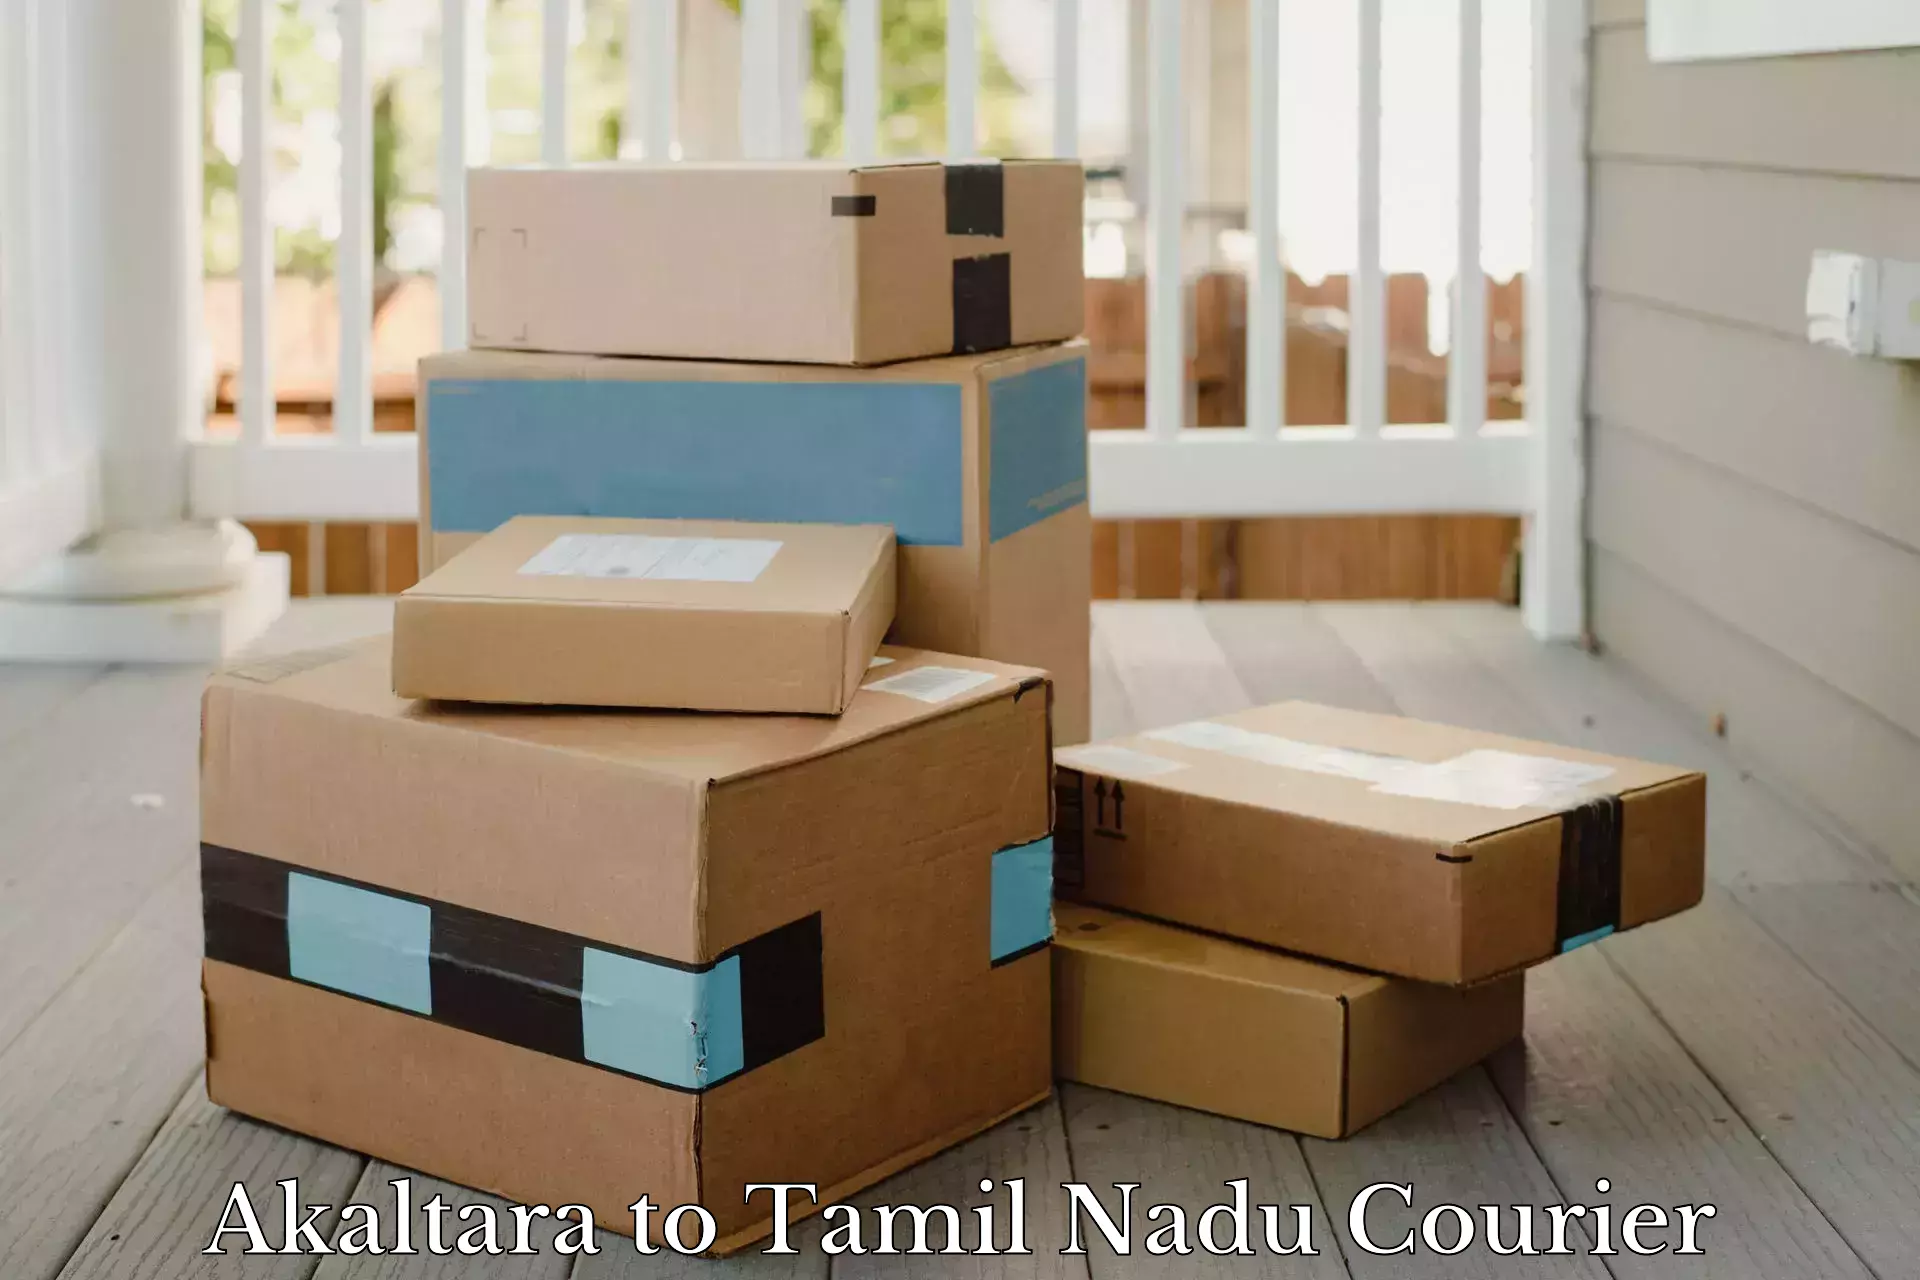 Efficient cargo handling Akaltara to Tamil Nadu